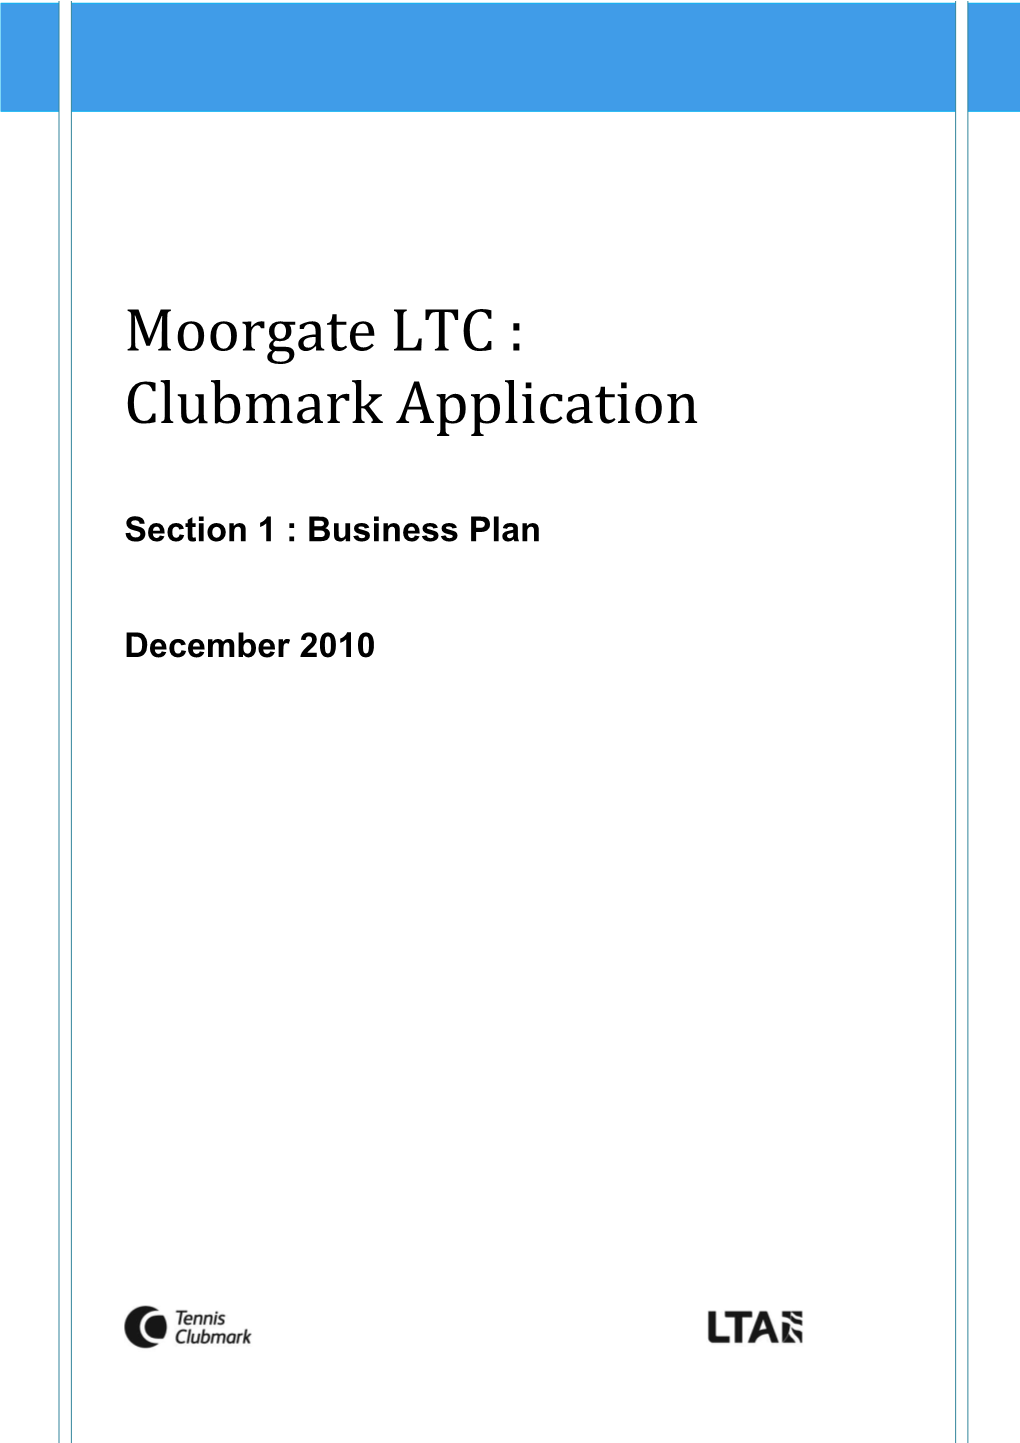 Moorgate LTC : Clubmark Application